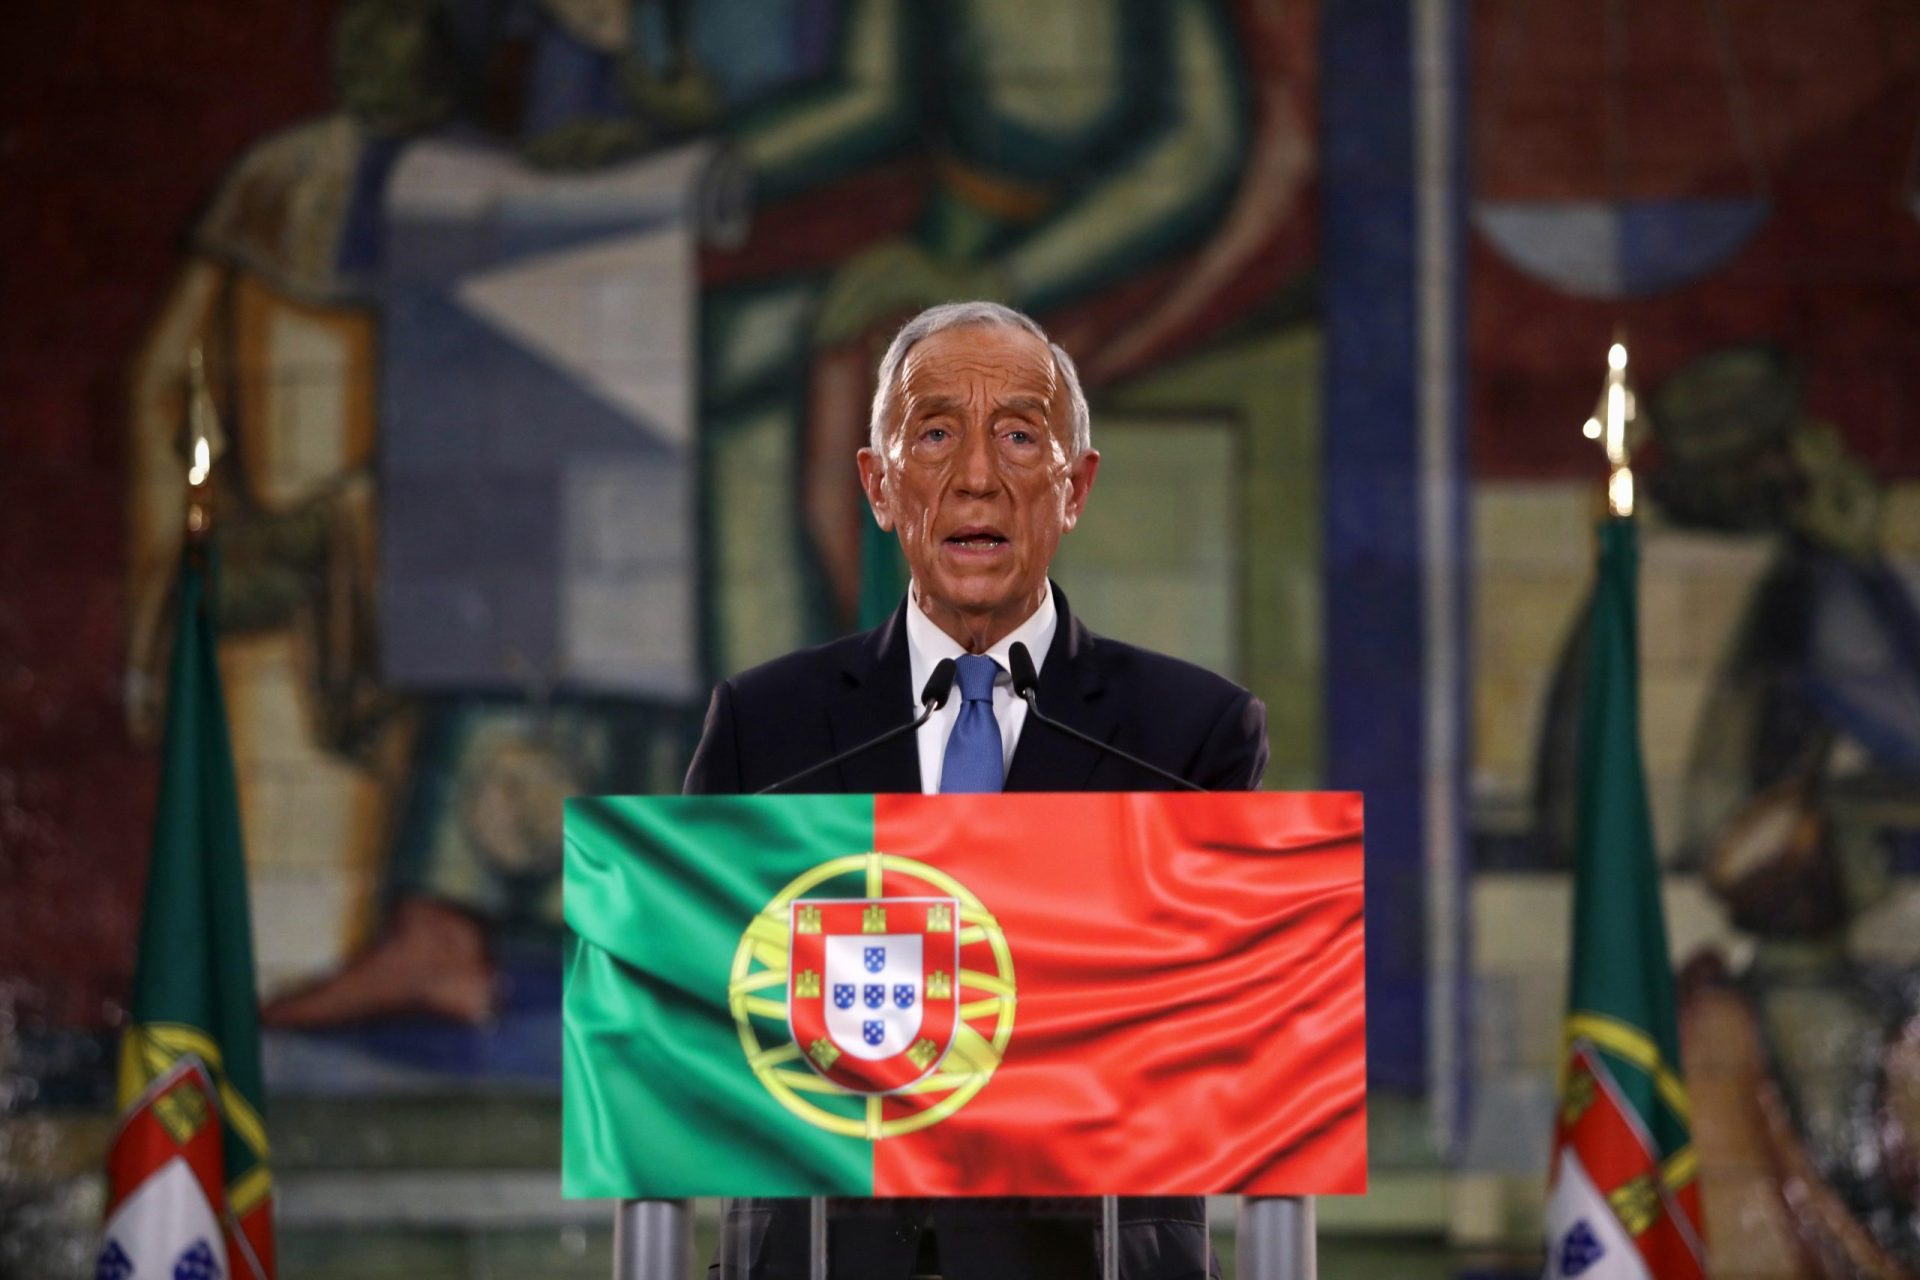 Marcelo pede “consenso” na escolha de juízes para o Tribunal Constitucional